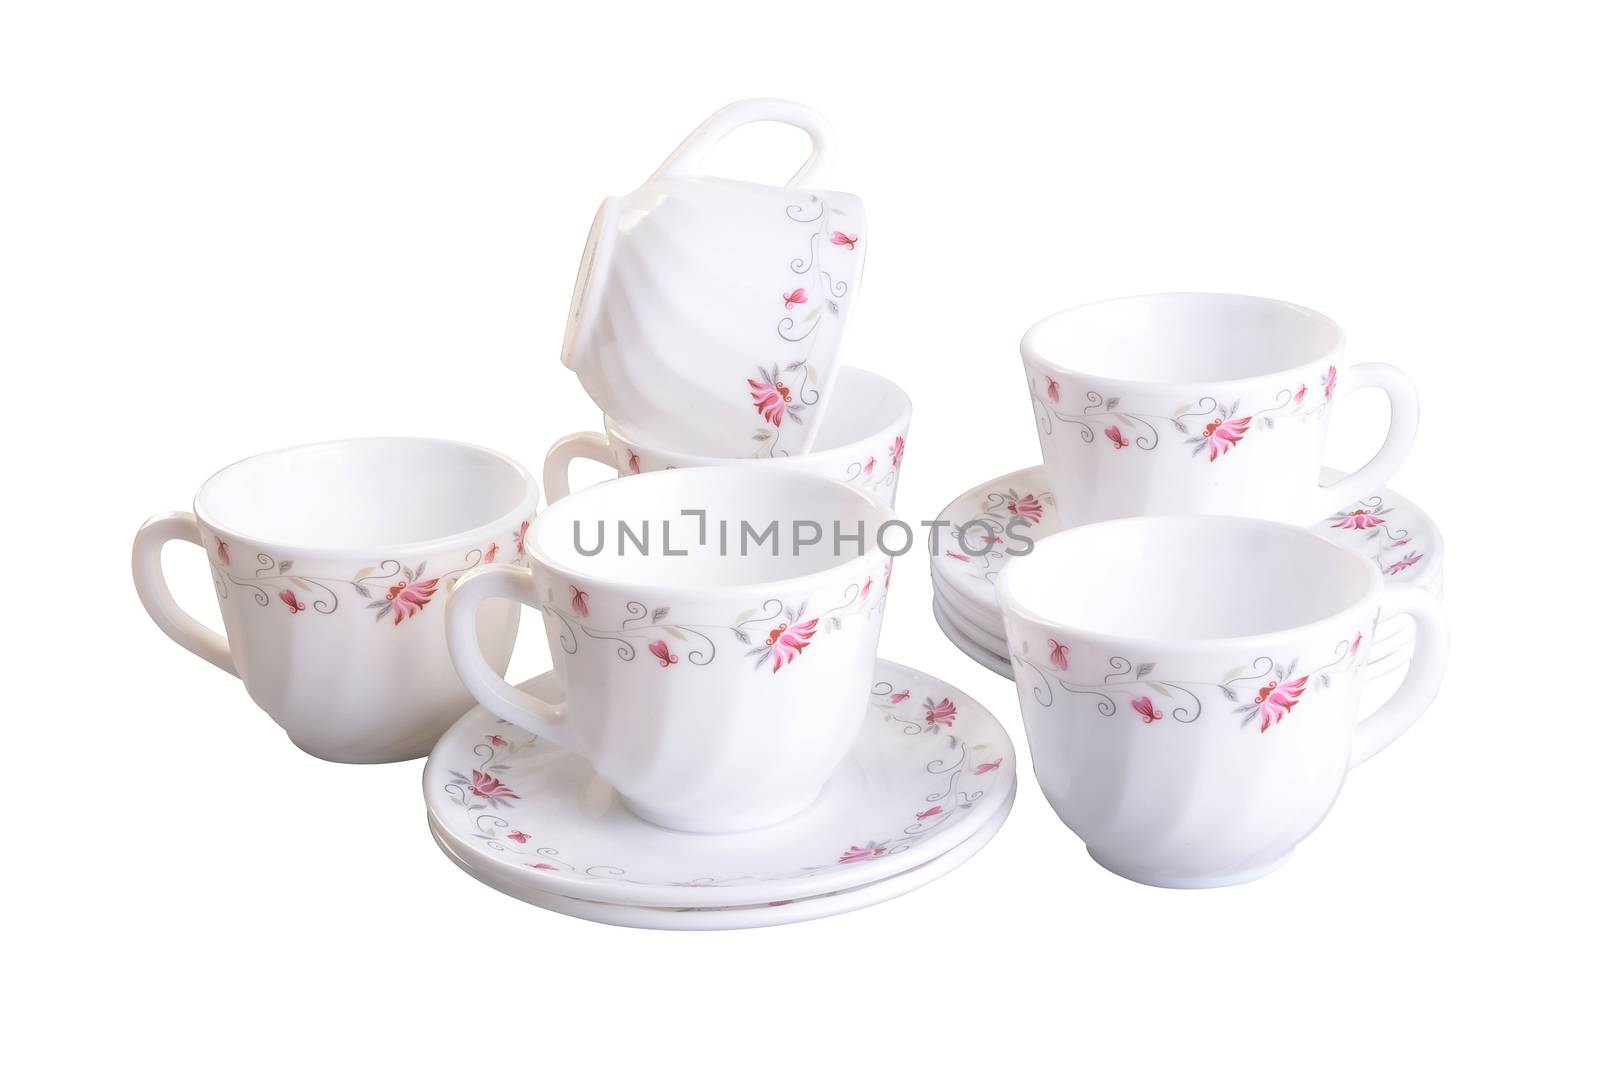 teacup. teacup set on a background. teacup. teacup set on a back by heinteh